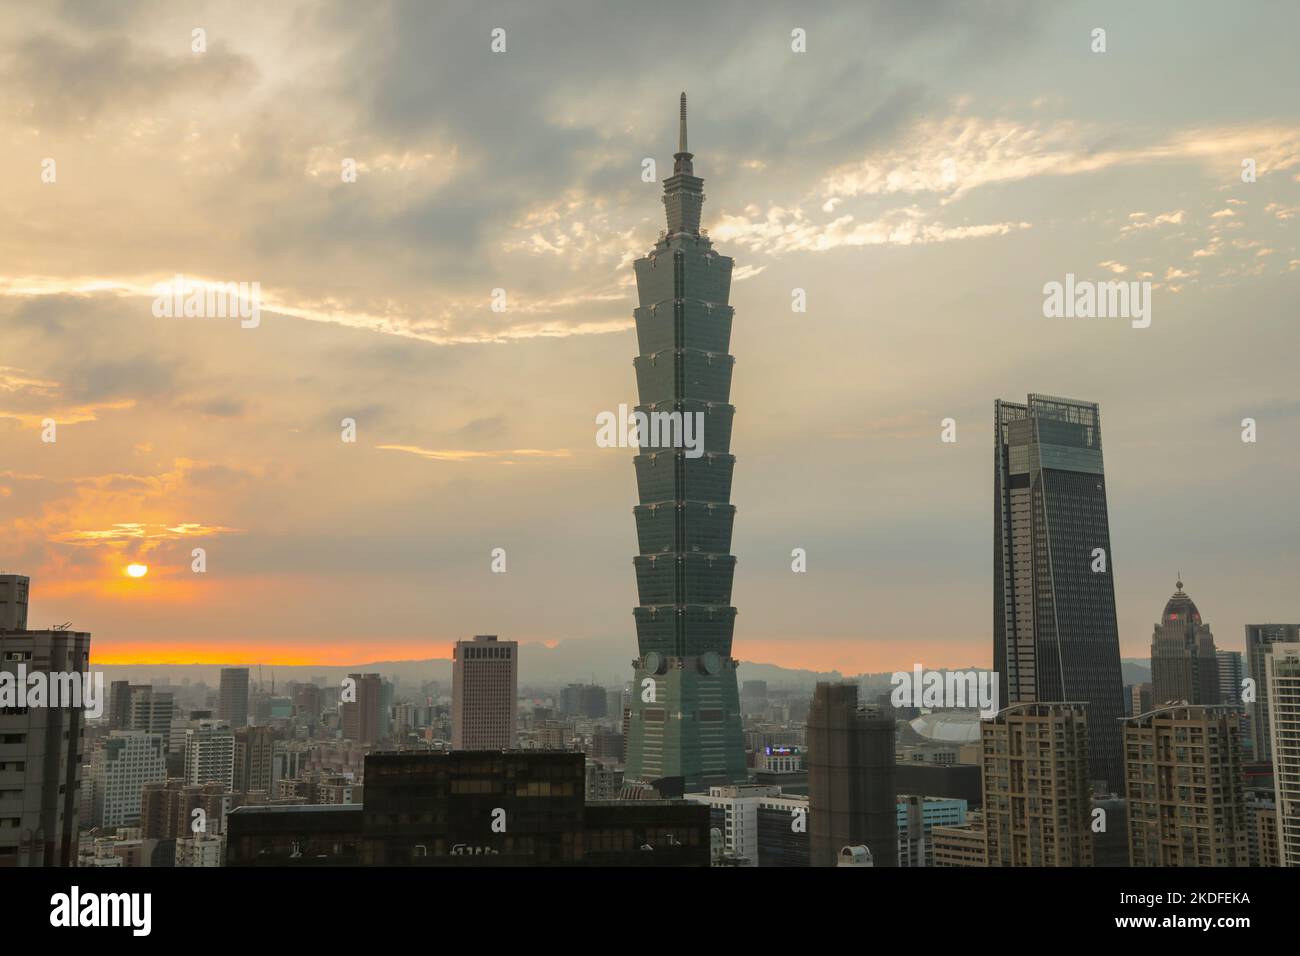 TAIWEI CAPITALE DE TAIWAN Stockfoto